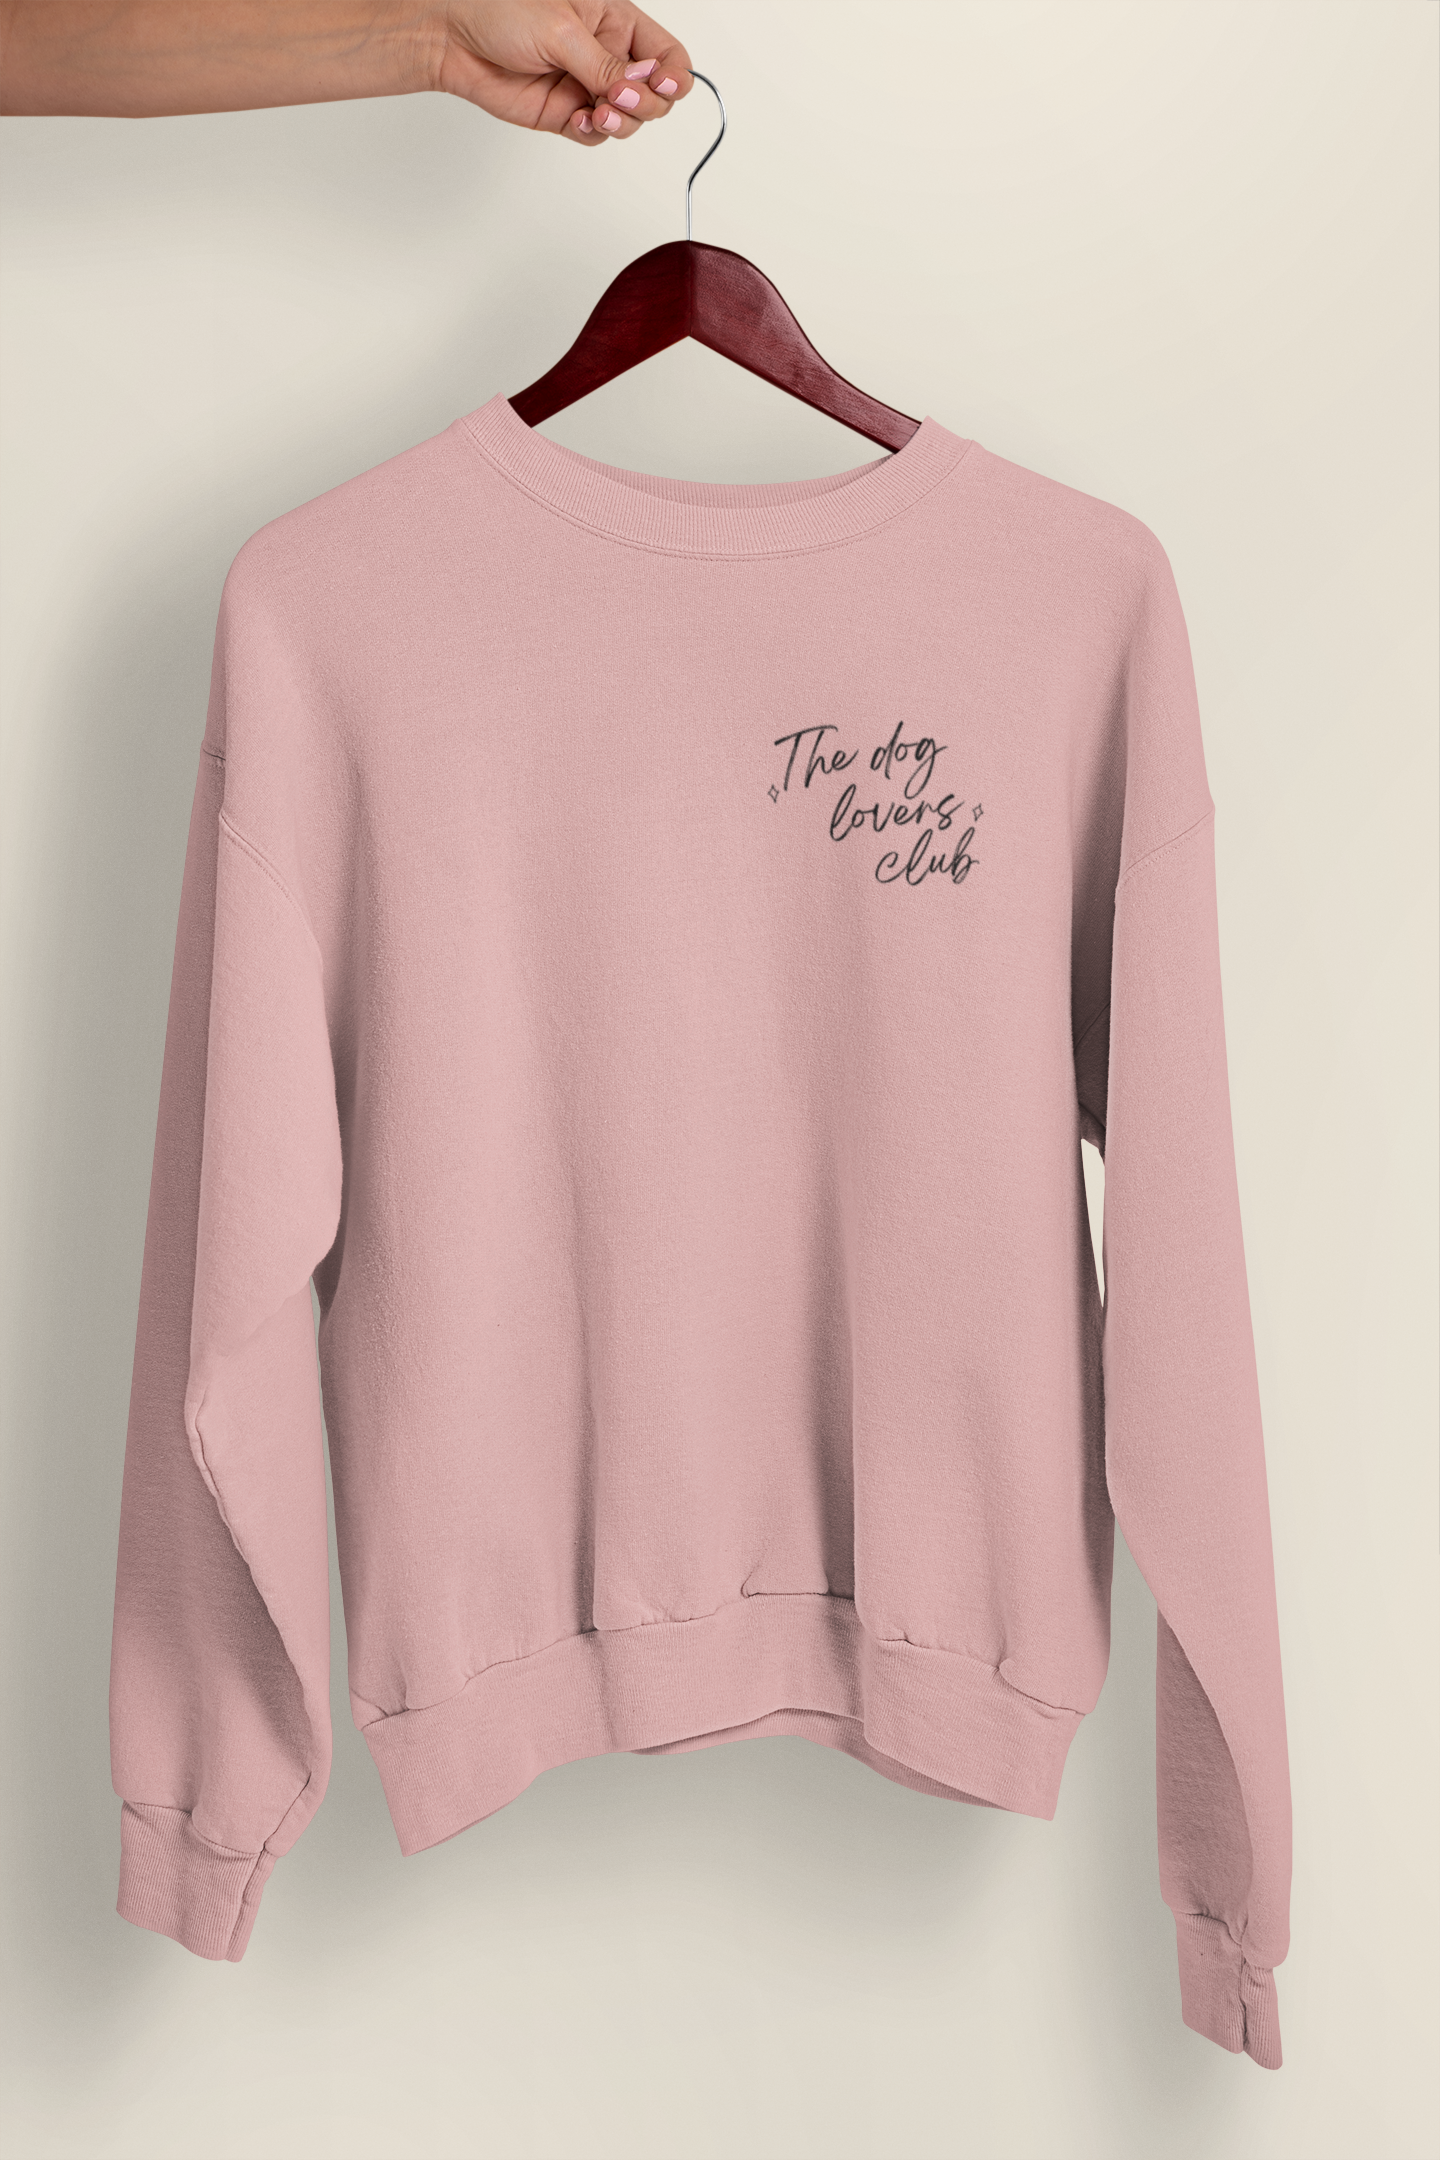 Embroidered | The Dog Lovers Club | Unisex Sweatshirt